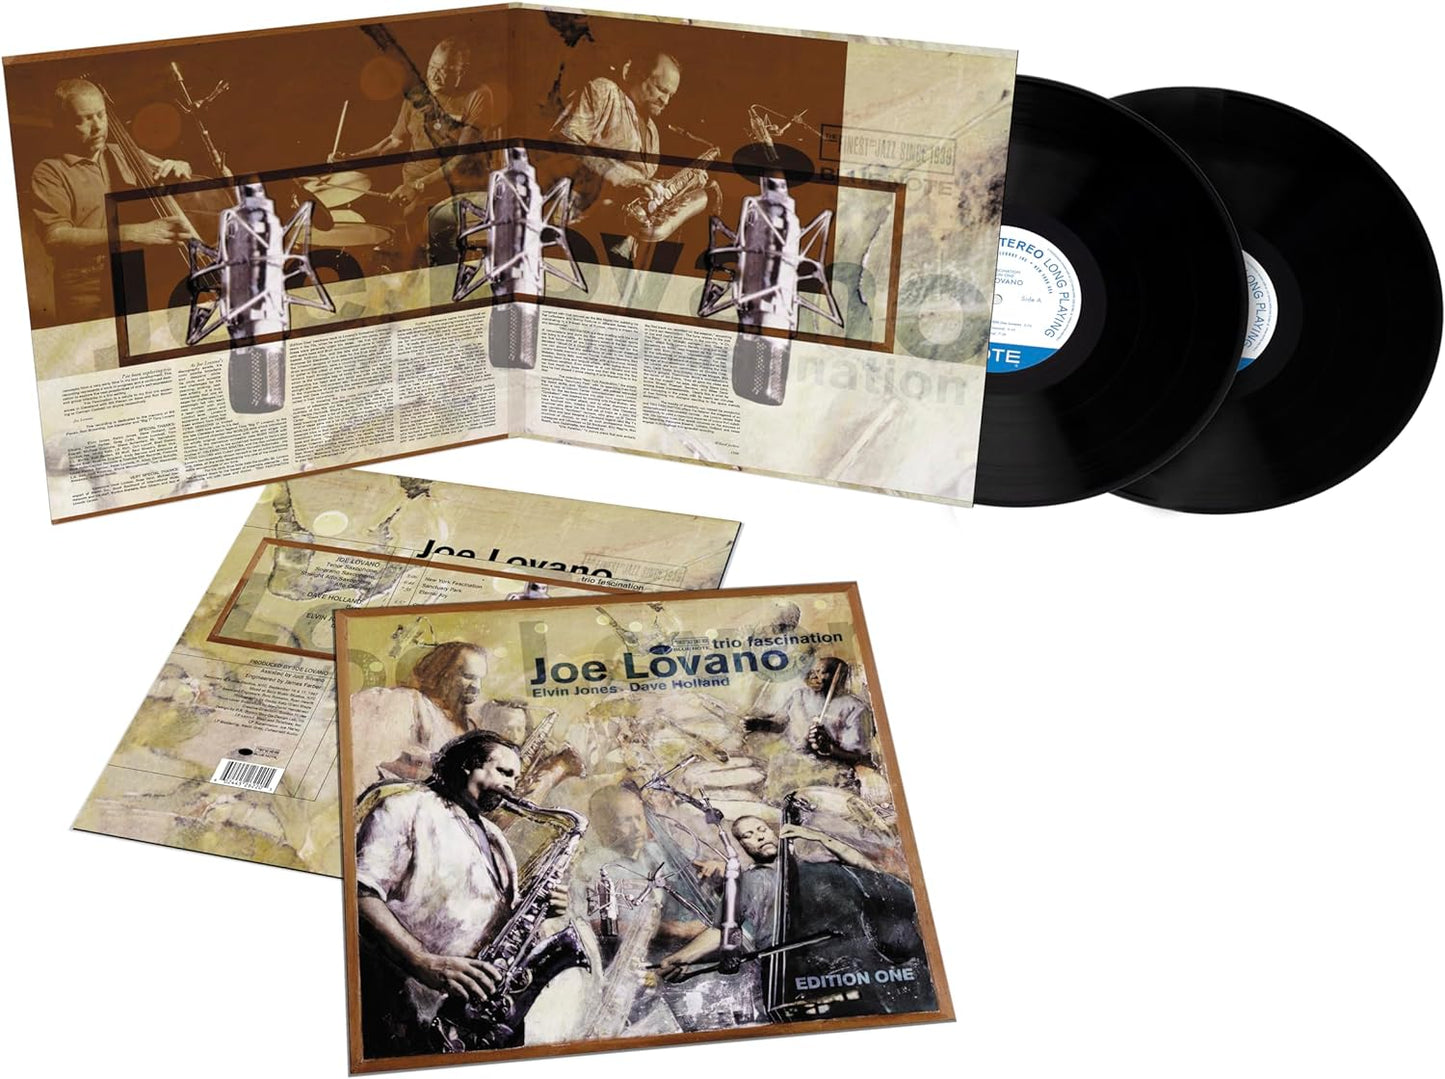 Lovano, Joe/Trio Fascination (Blue Note Tone Poet) [LP]